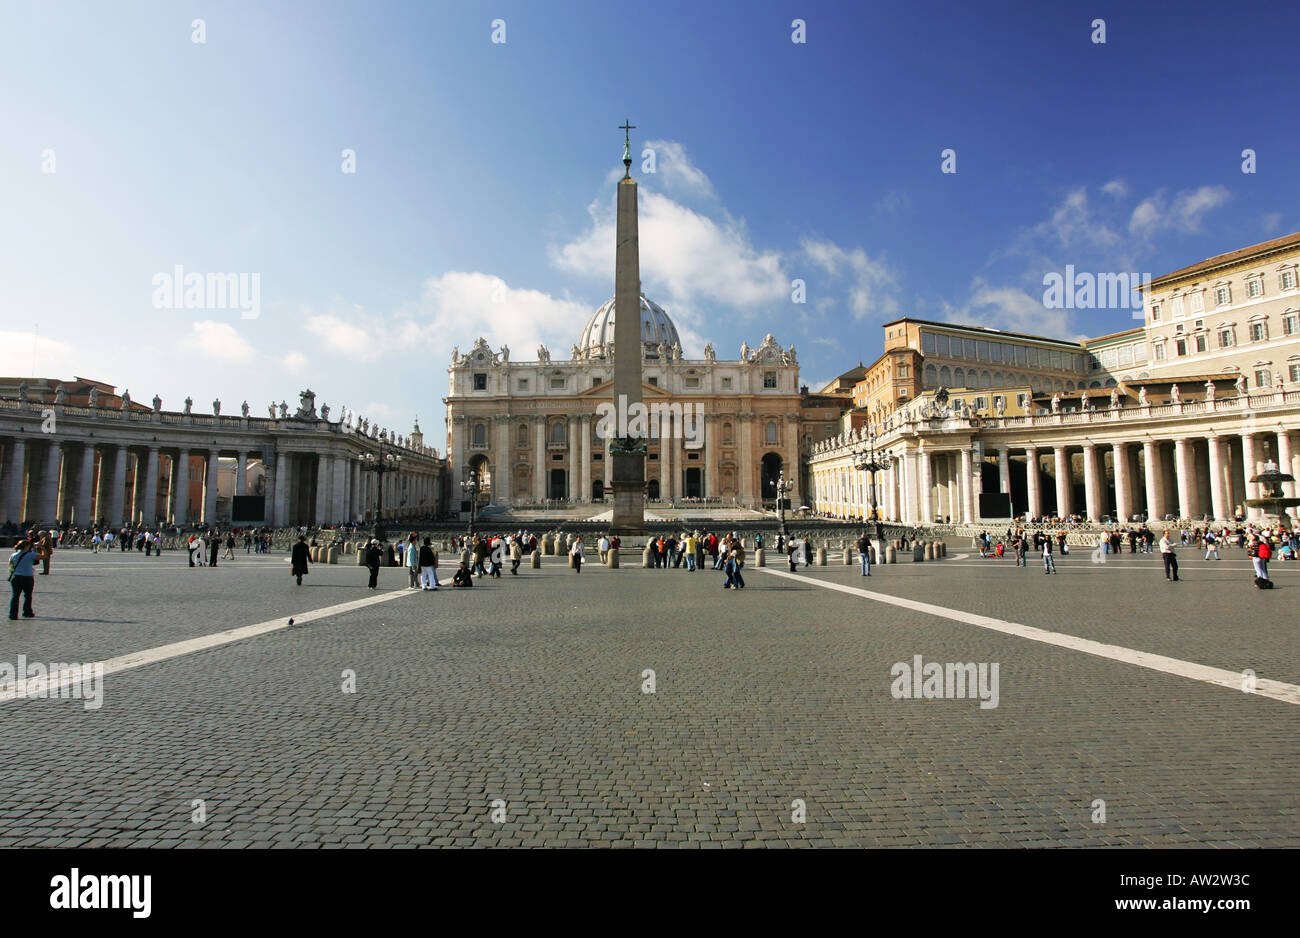 St Peters Square Piazza San Pietro Basilica tourists obelisk Vatican City Rome Italy European vacation destination Stock Photo